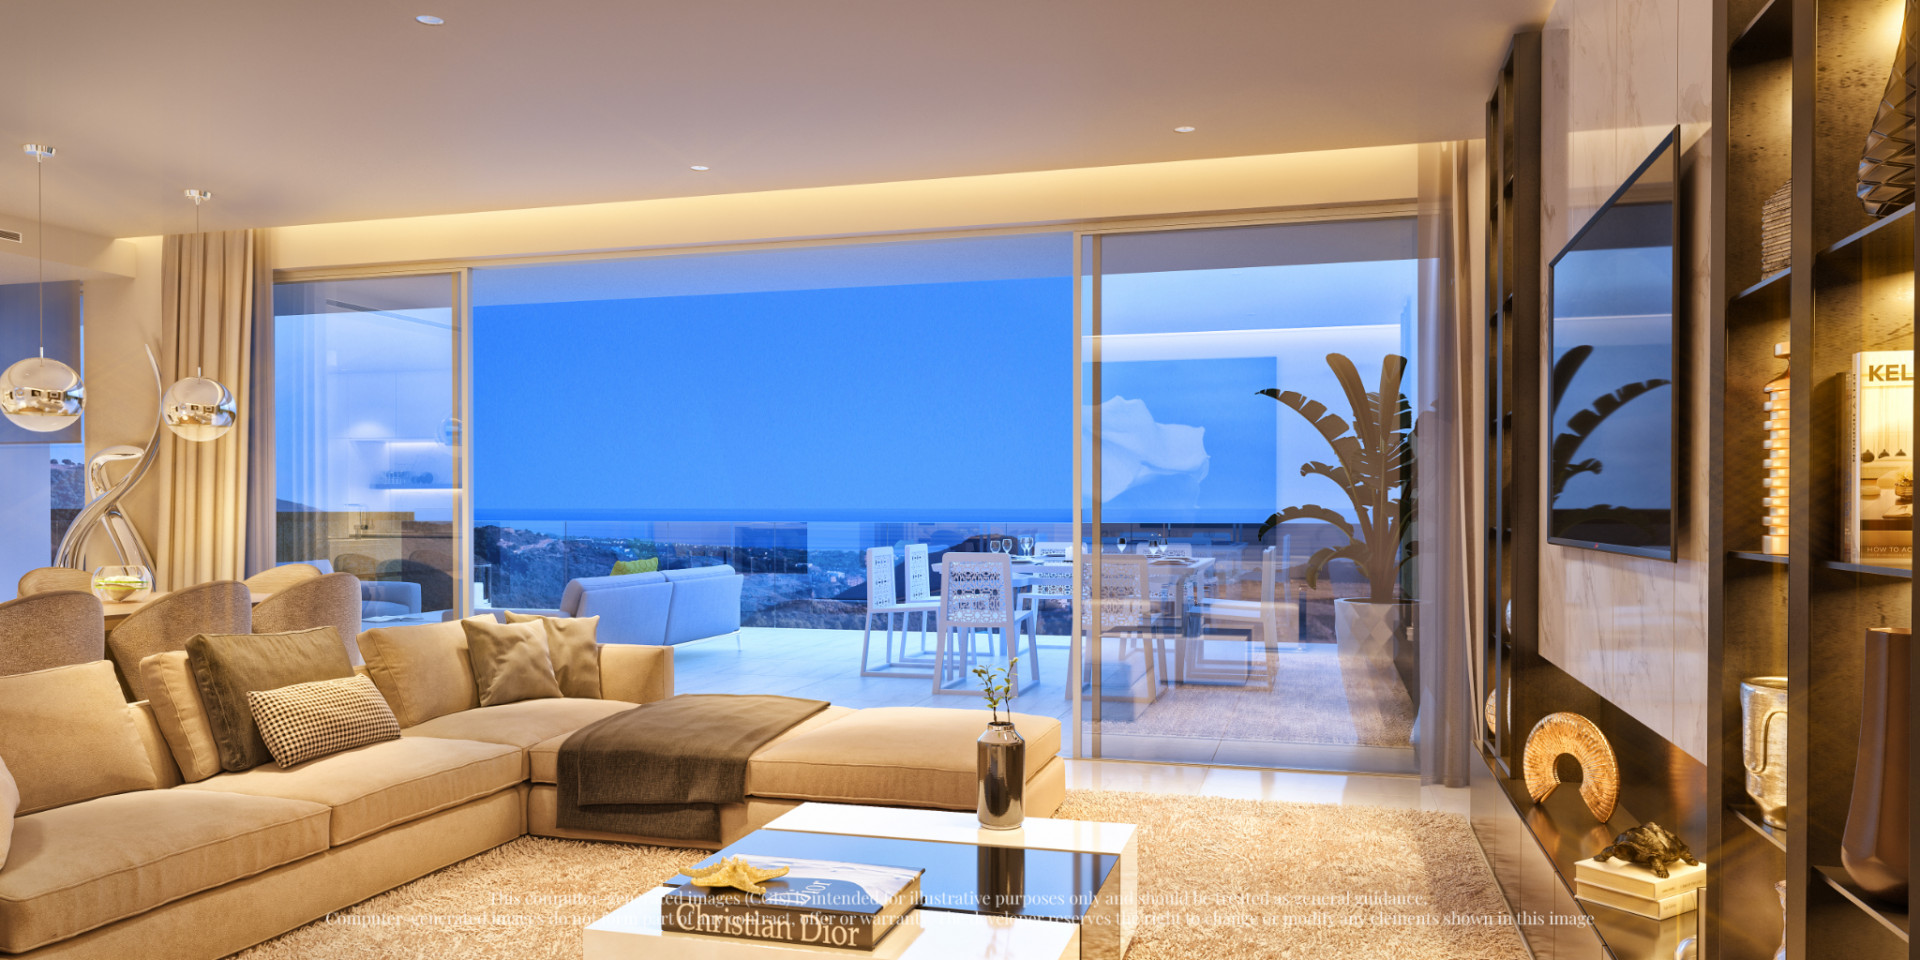 Ceibas: 10 contemporary design homes with views of the Mediterranean Sea located in Palo Alto, Ojen. | Image 1